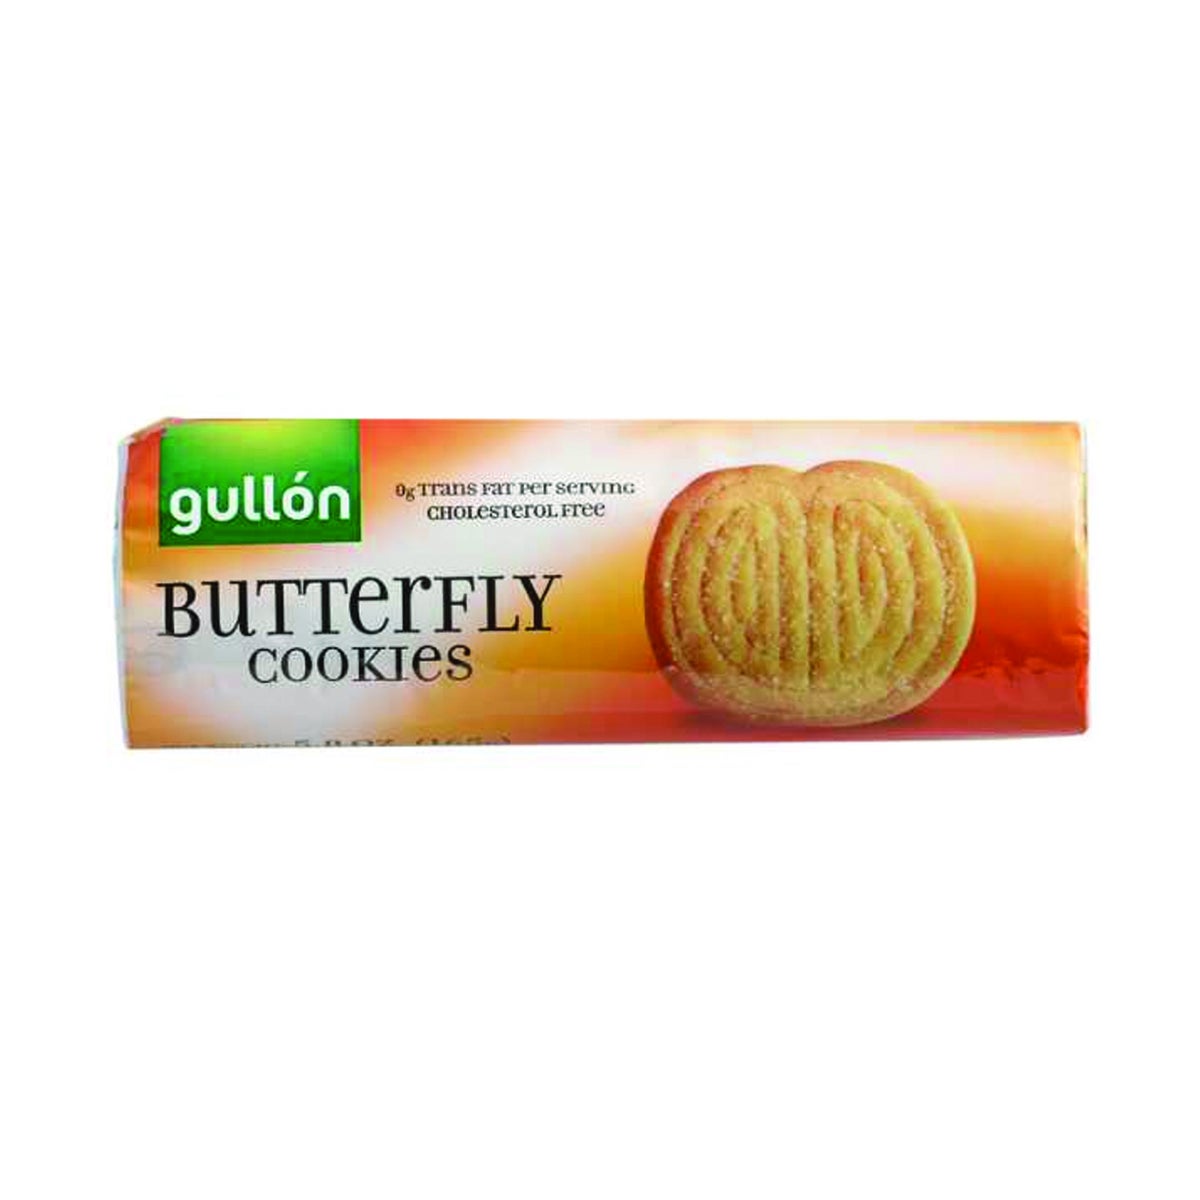 Butterfly cookies "Gullon" 165 * 16